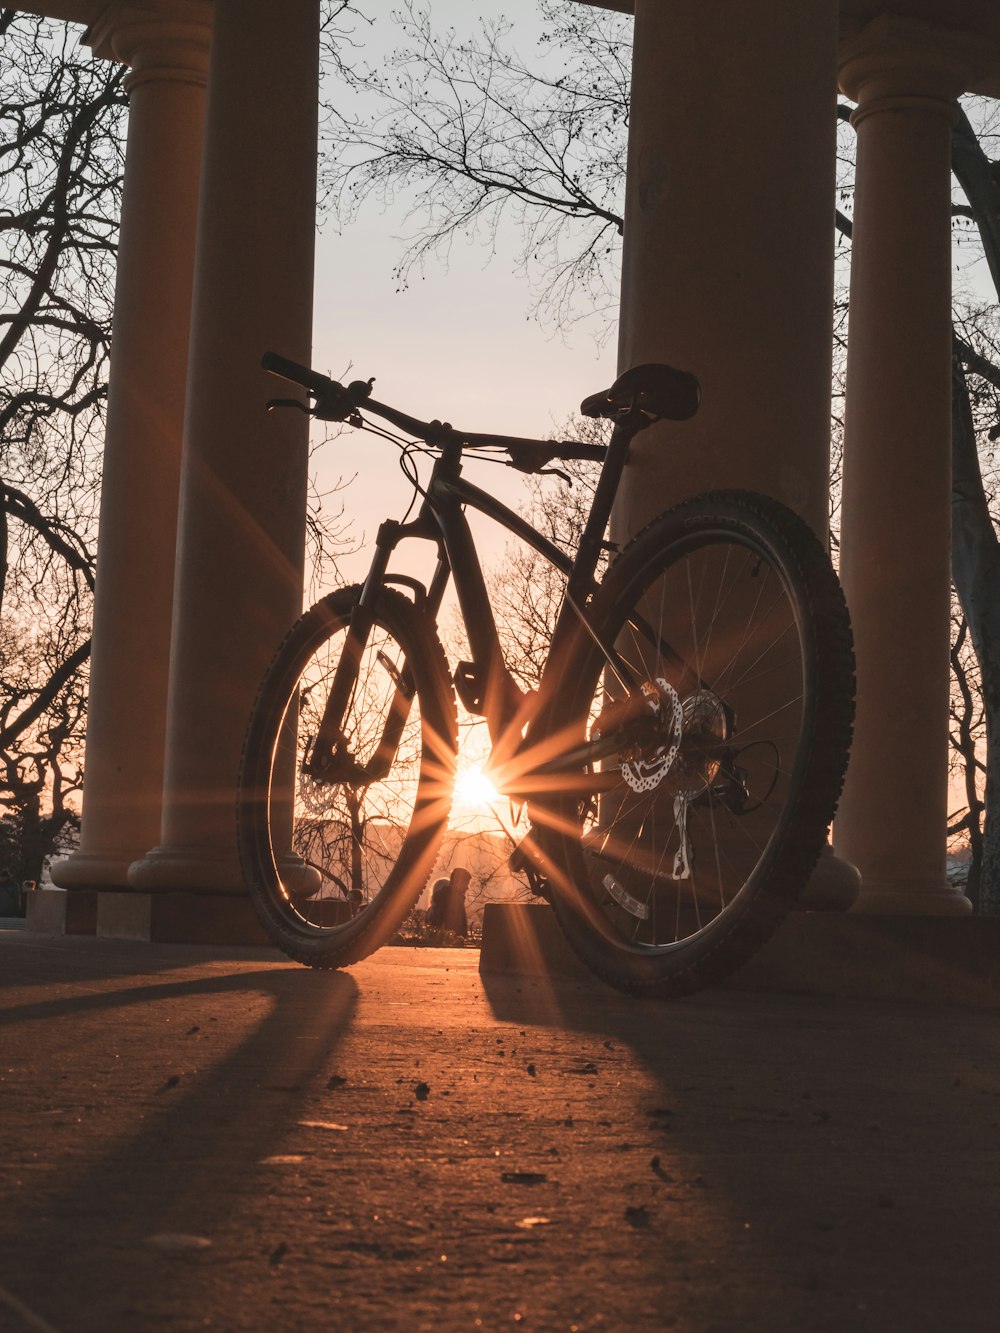 rigid bicycle under sunrays